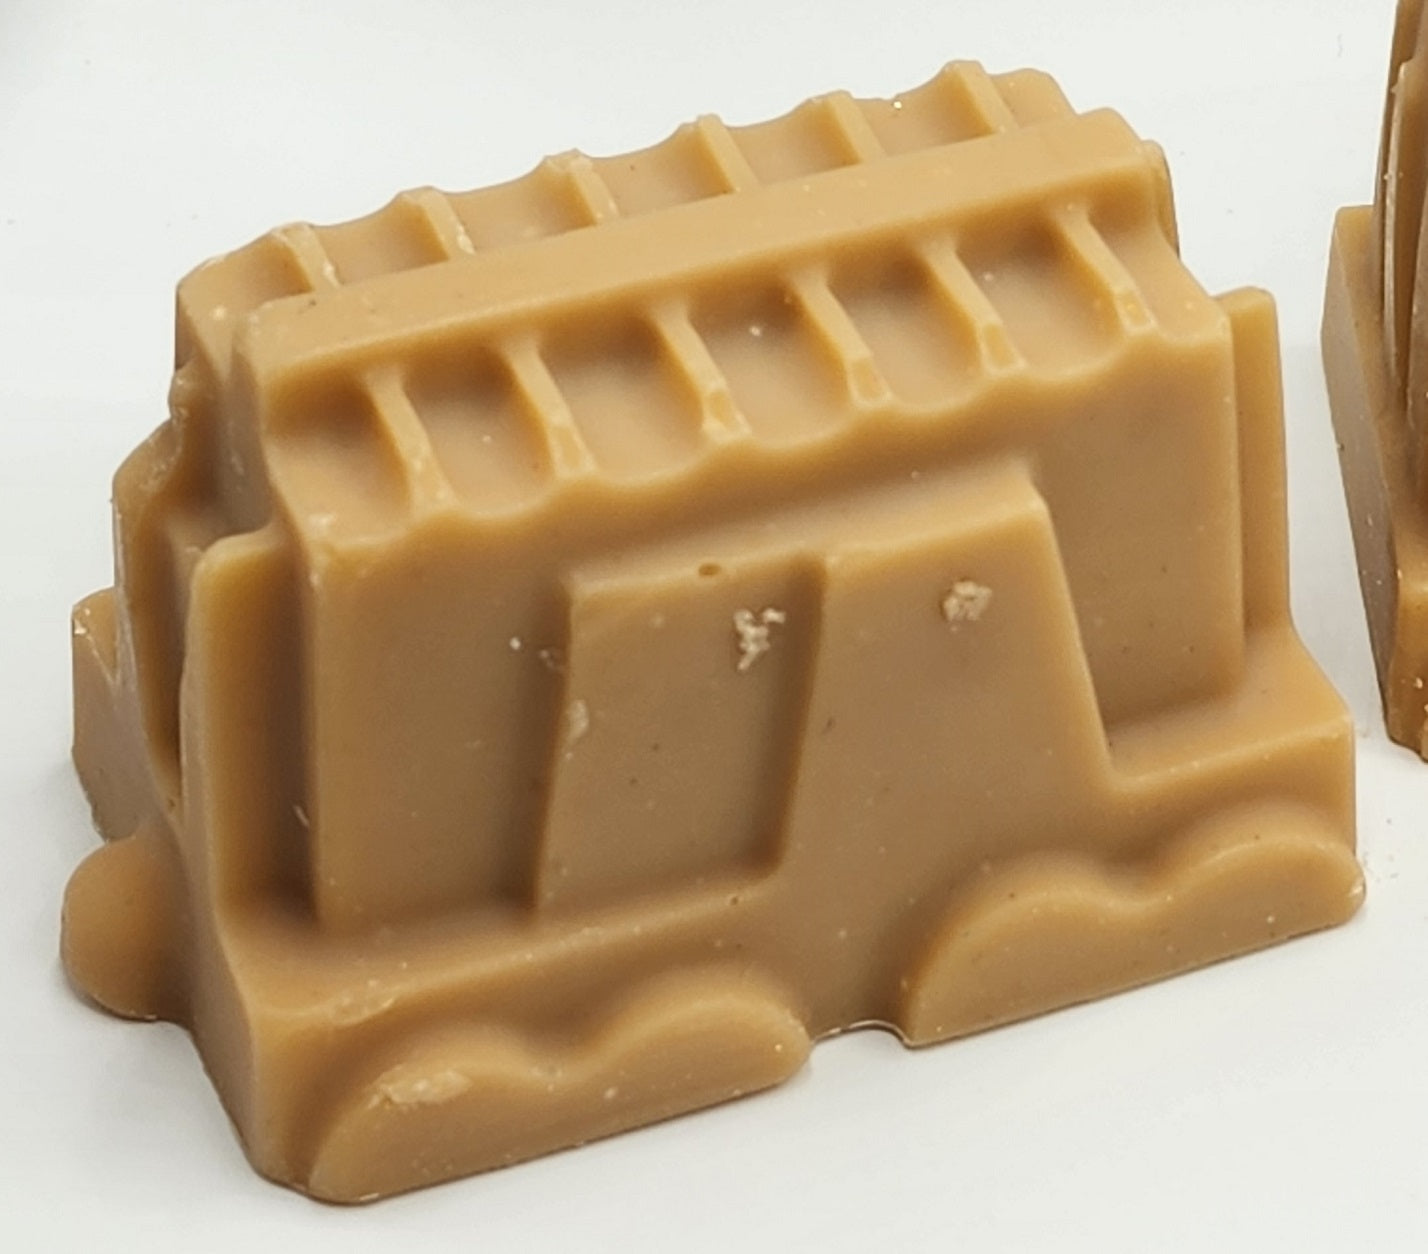 GOLDEN TRAIN / Kid's Bar Soap / Soaps for Children / Bar Soap / Gift Soap / Gift Idea / Handmade Soap / Cold Process Soap